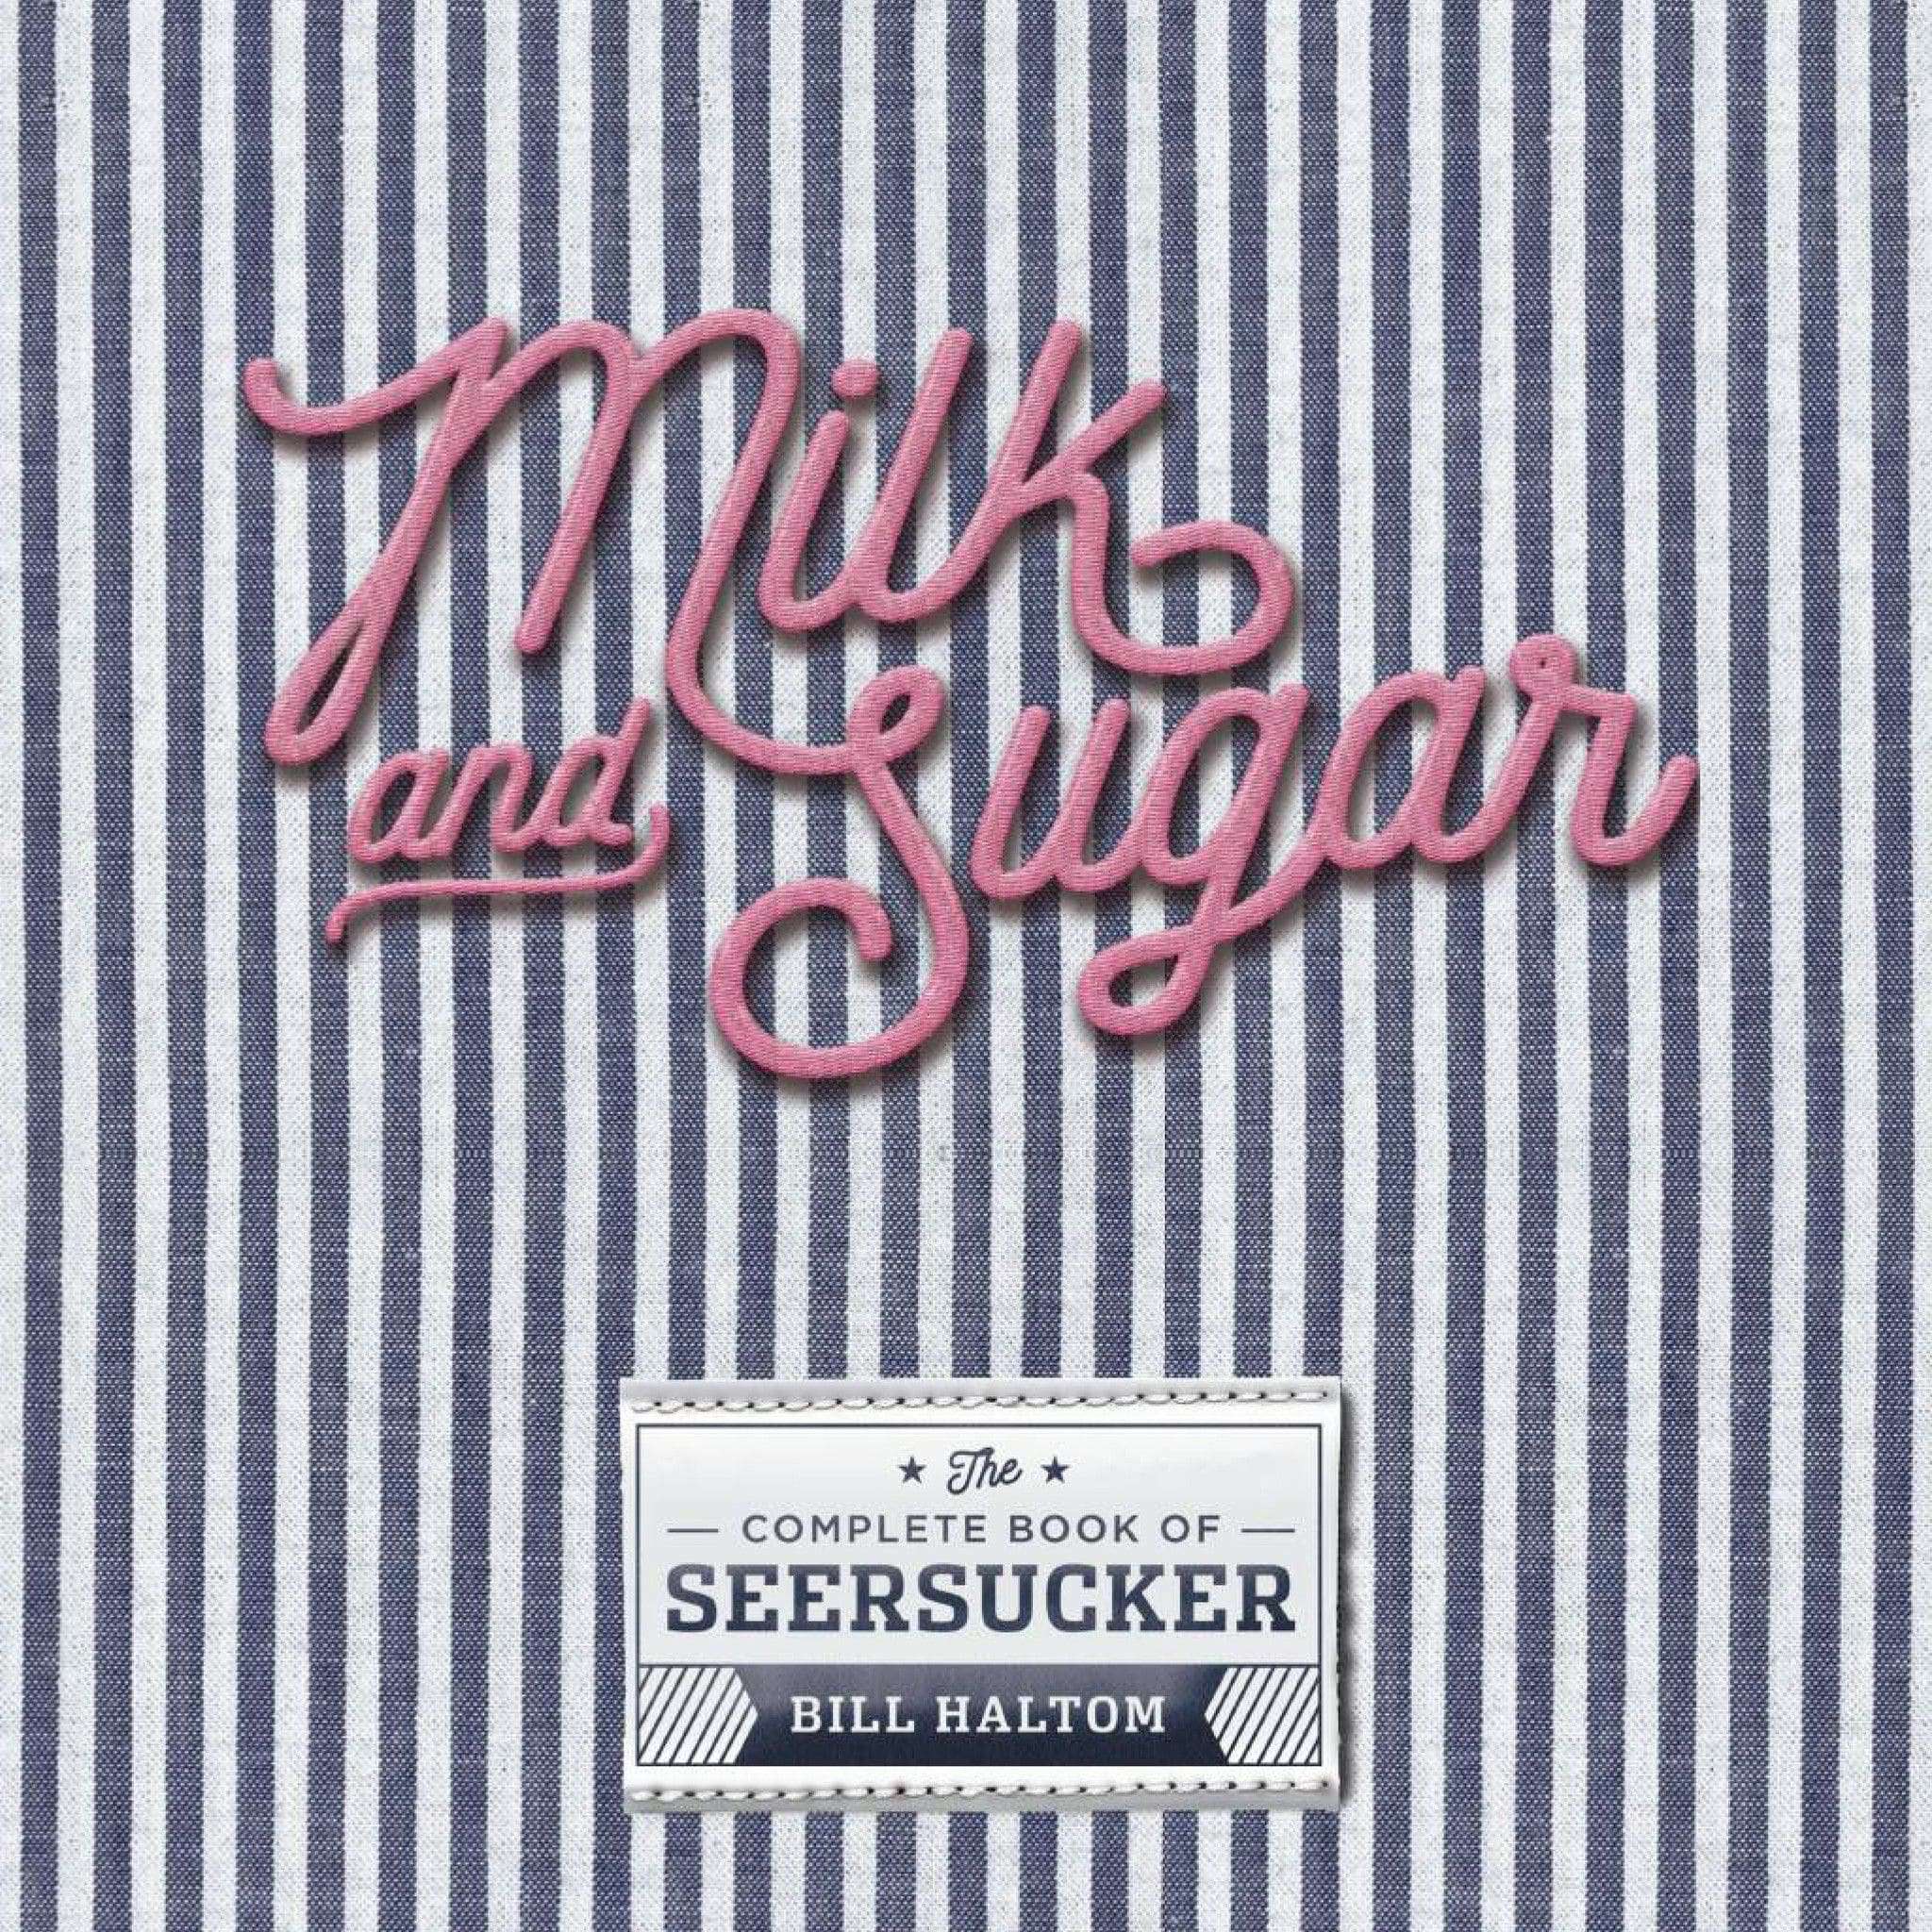 Milk & Sugar: The Complete Book of Seersucker Hardcover by Bill Haltom - Country Club Prep